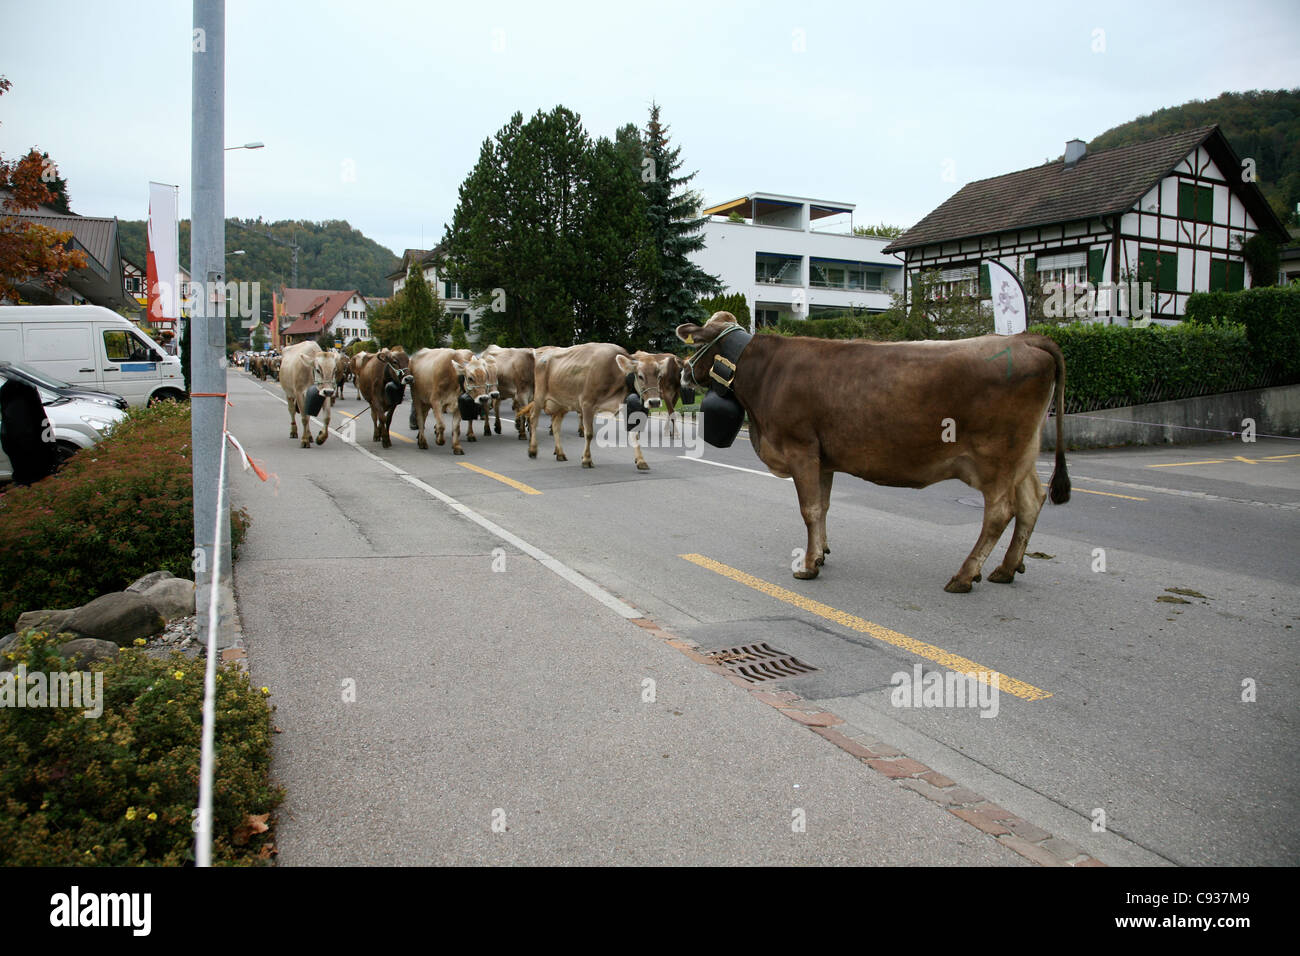 Cattle show in Switzerland Stock Photo